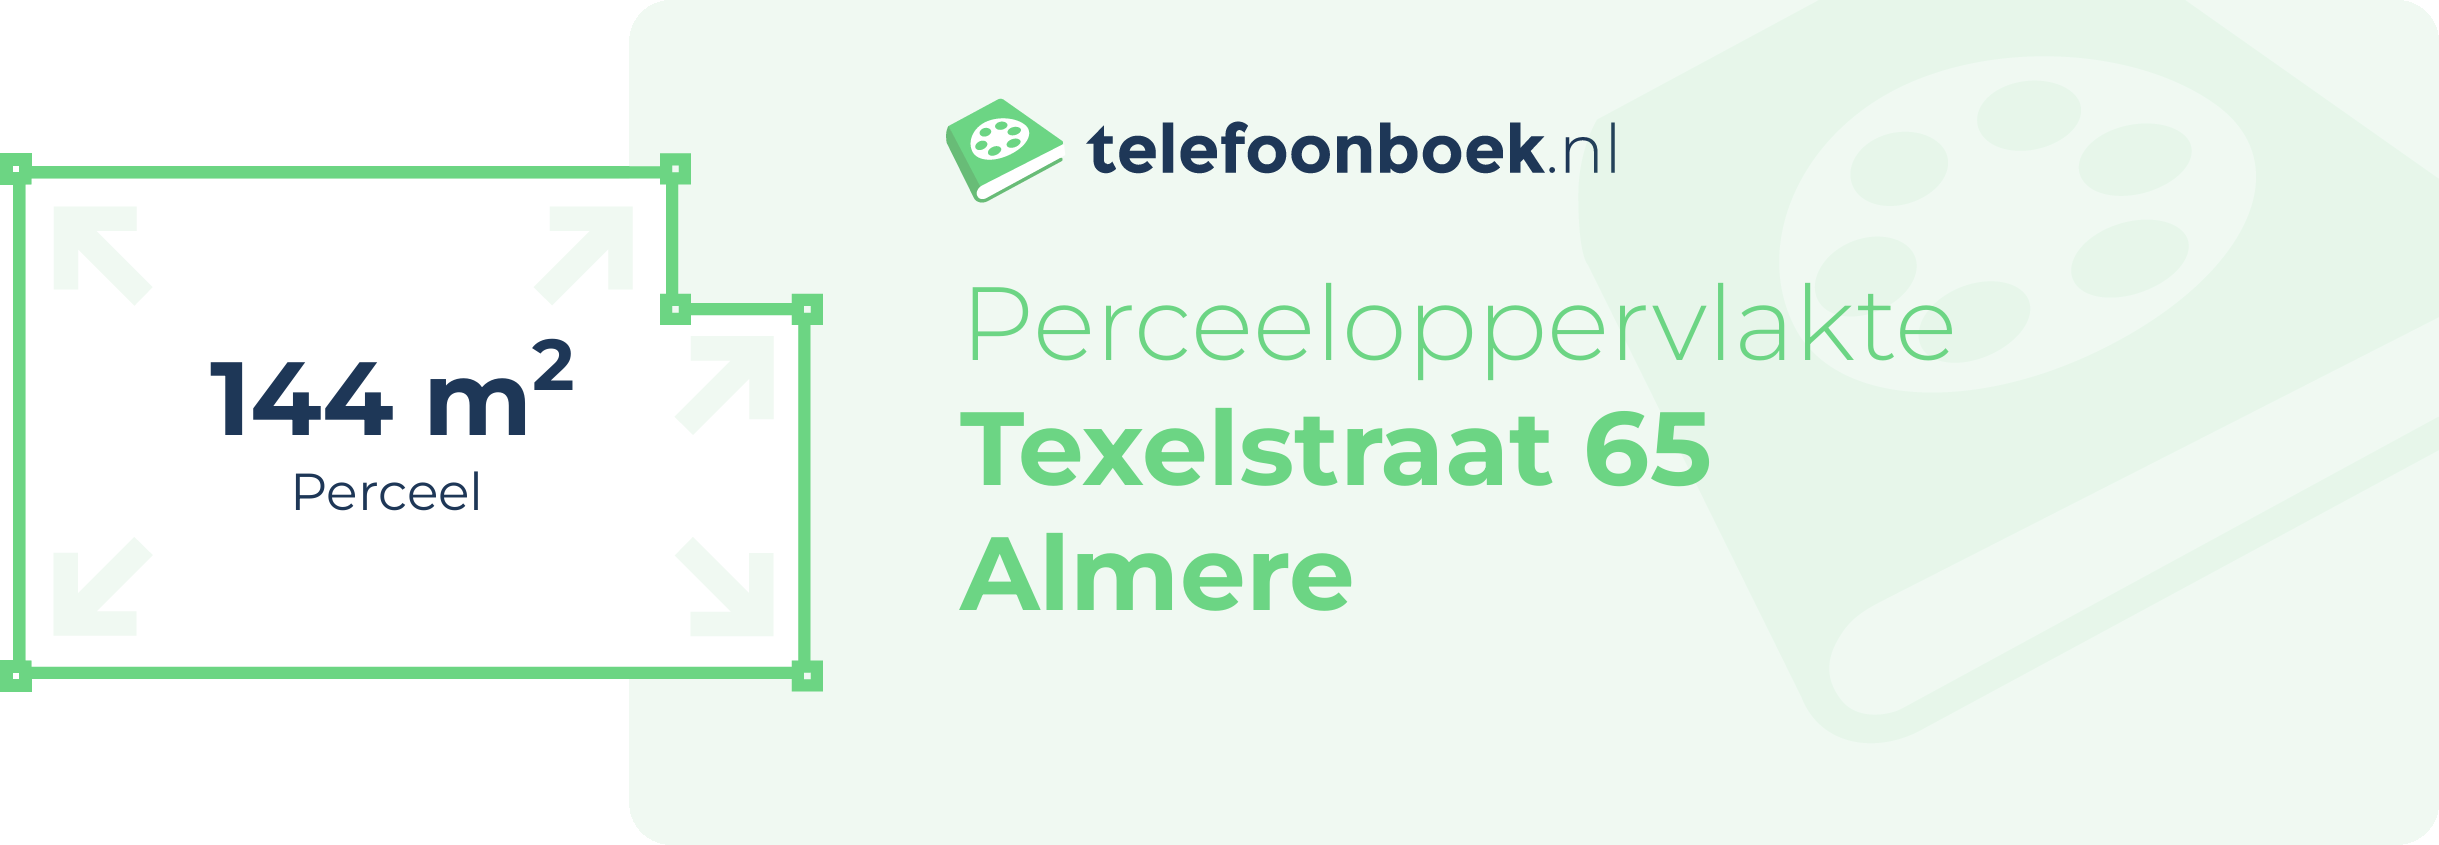 Perceeloppervlakte Texelstraat 65 Almere